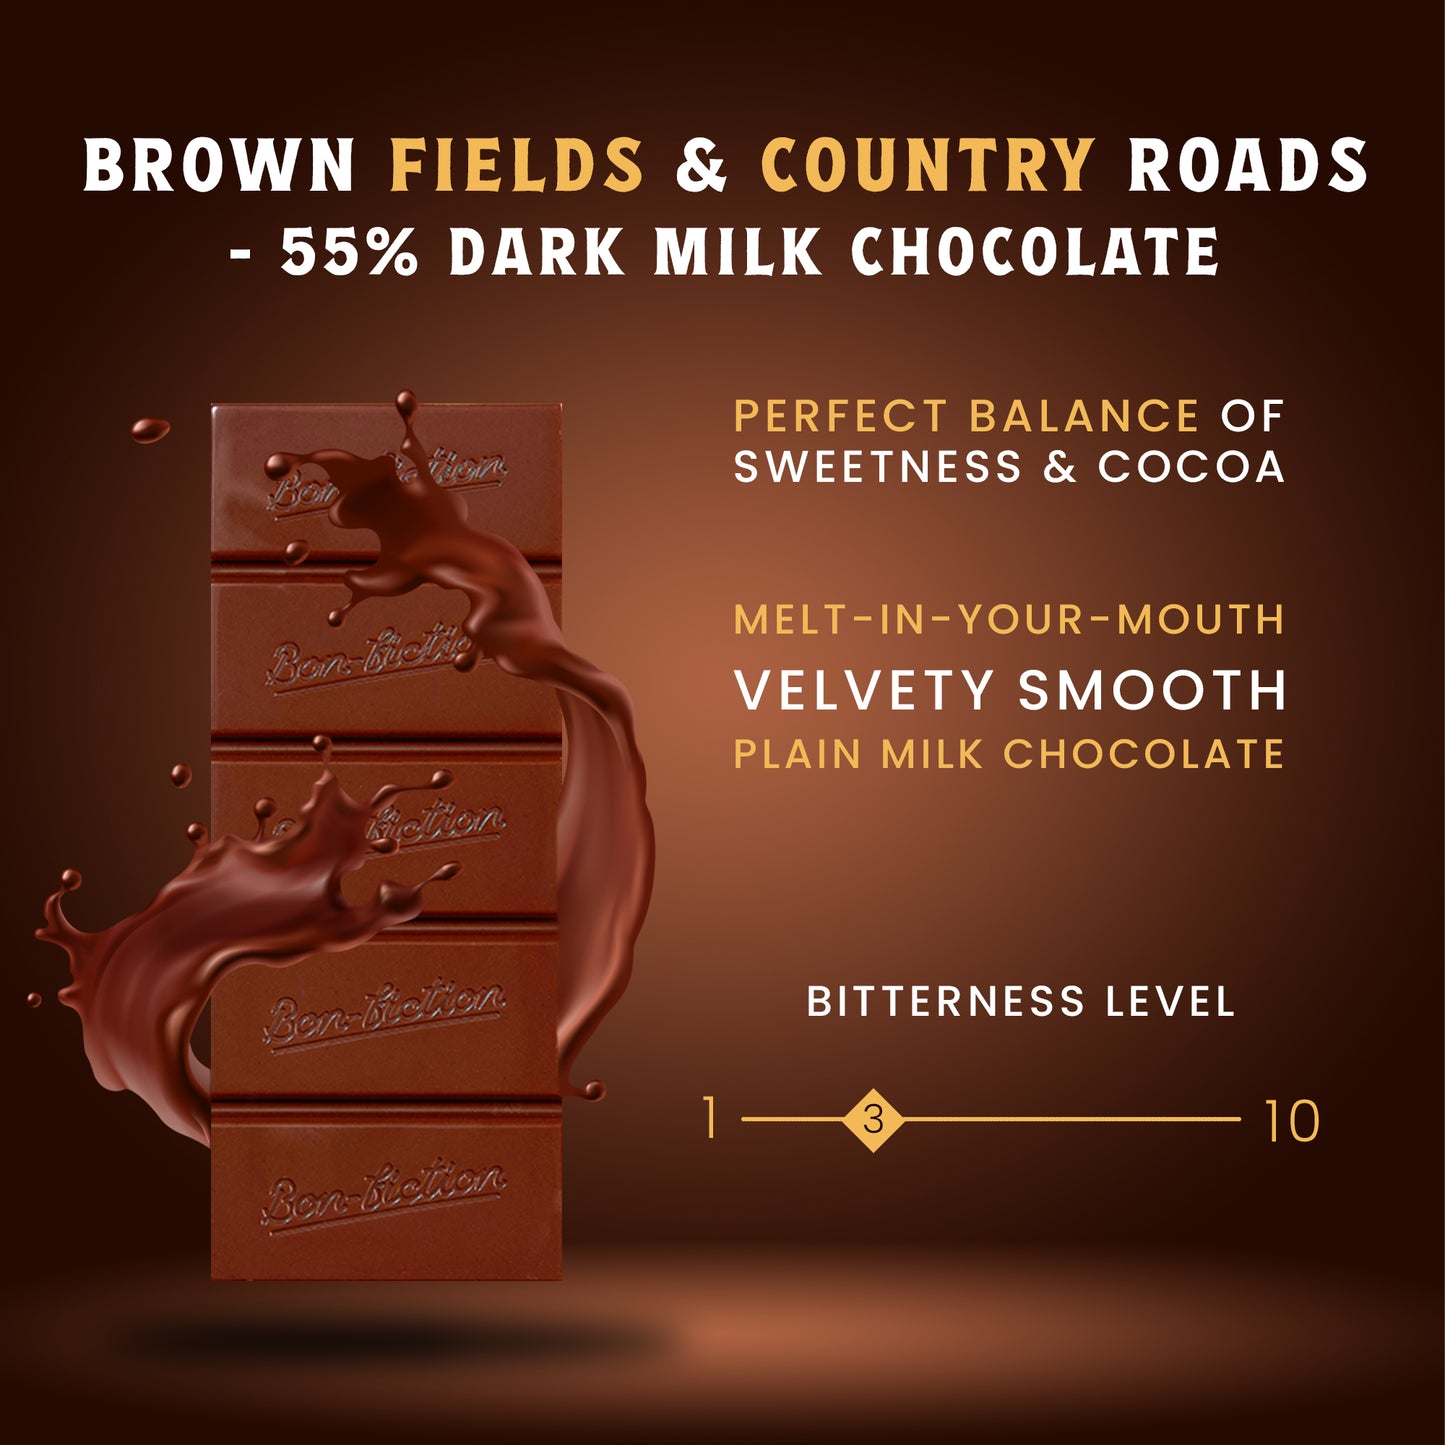 Brown Fields & Country Roads - 55% Dark Milk Chocolate - Pack of 3